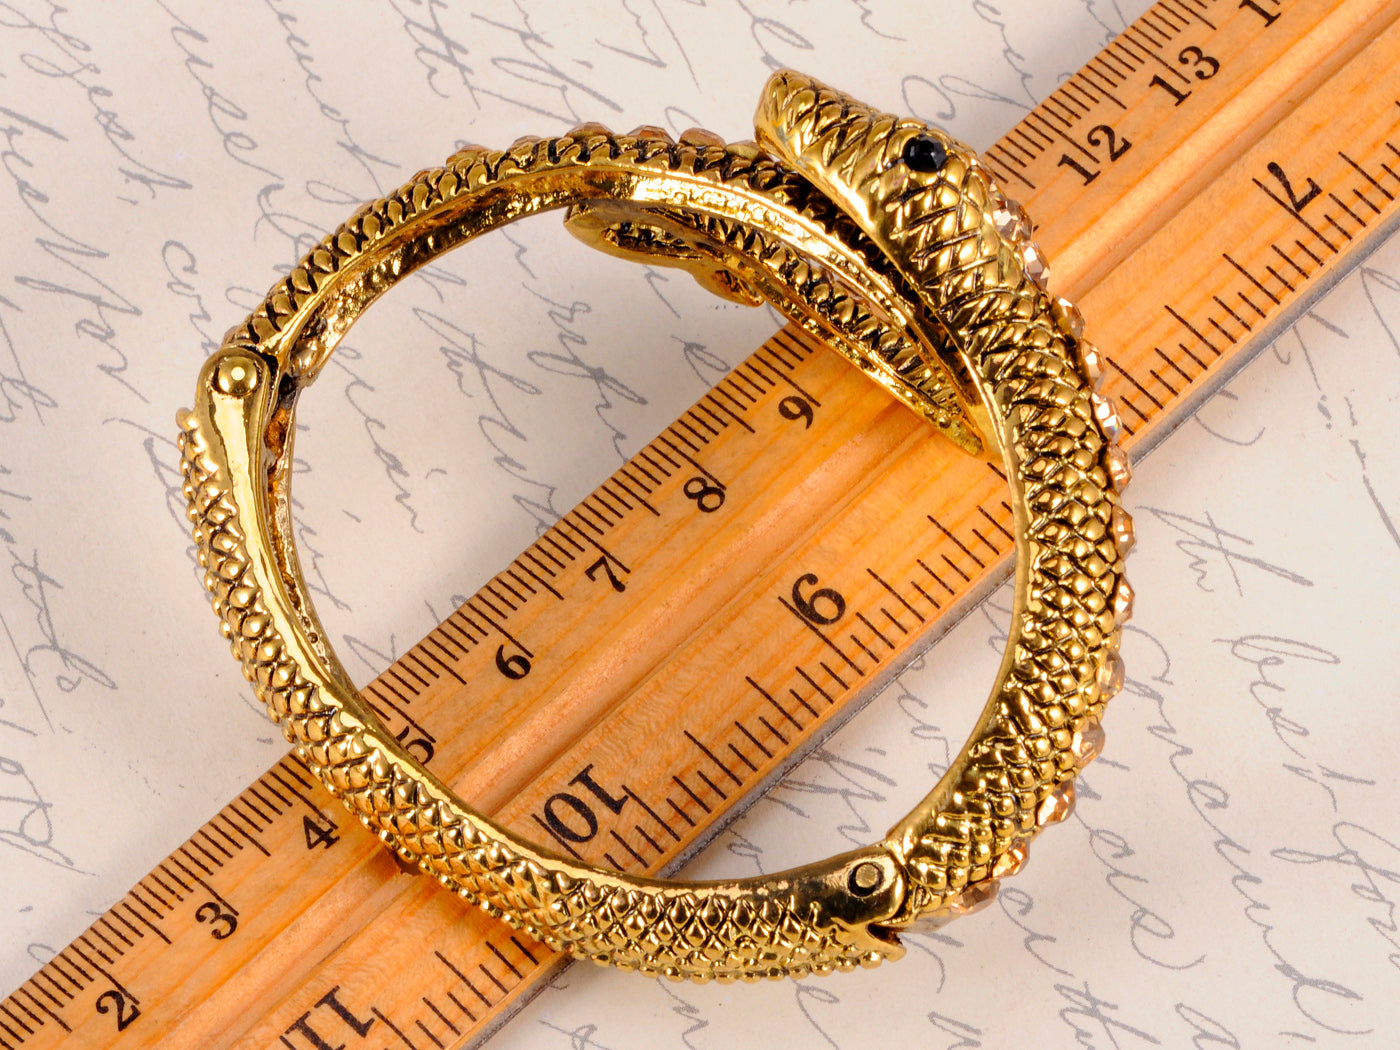 Gold Antique Like Egyptian Topaz Blk Snake Cuff Bangle Bracelet